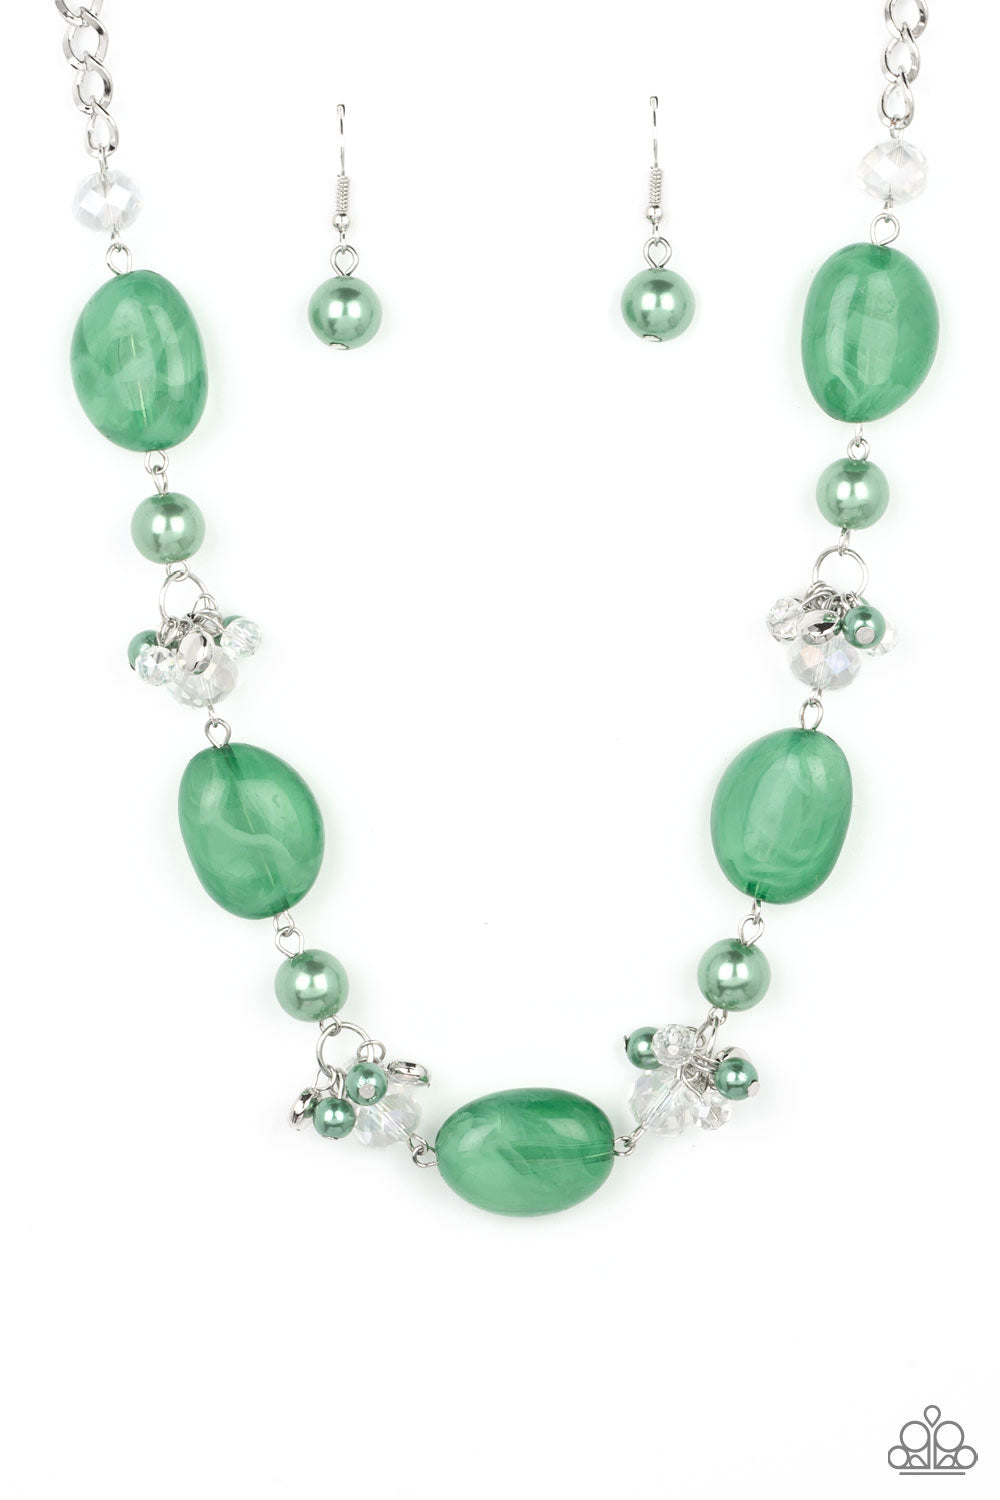 The Top TENACIOUS - Green Necklace freeshipping - JewLz4u Gemstone Gallery